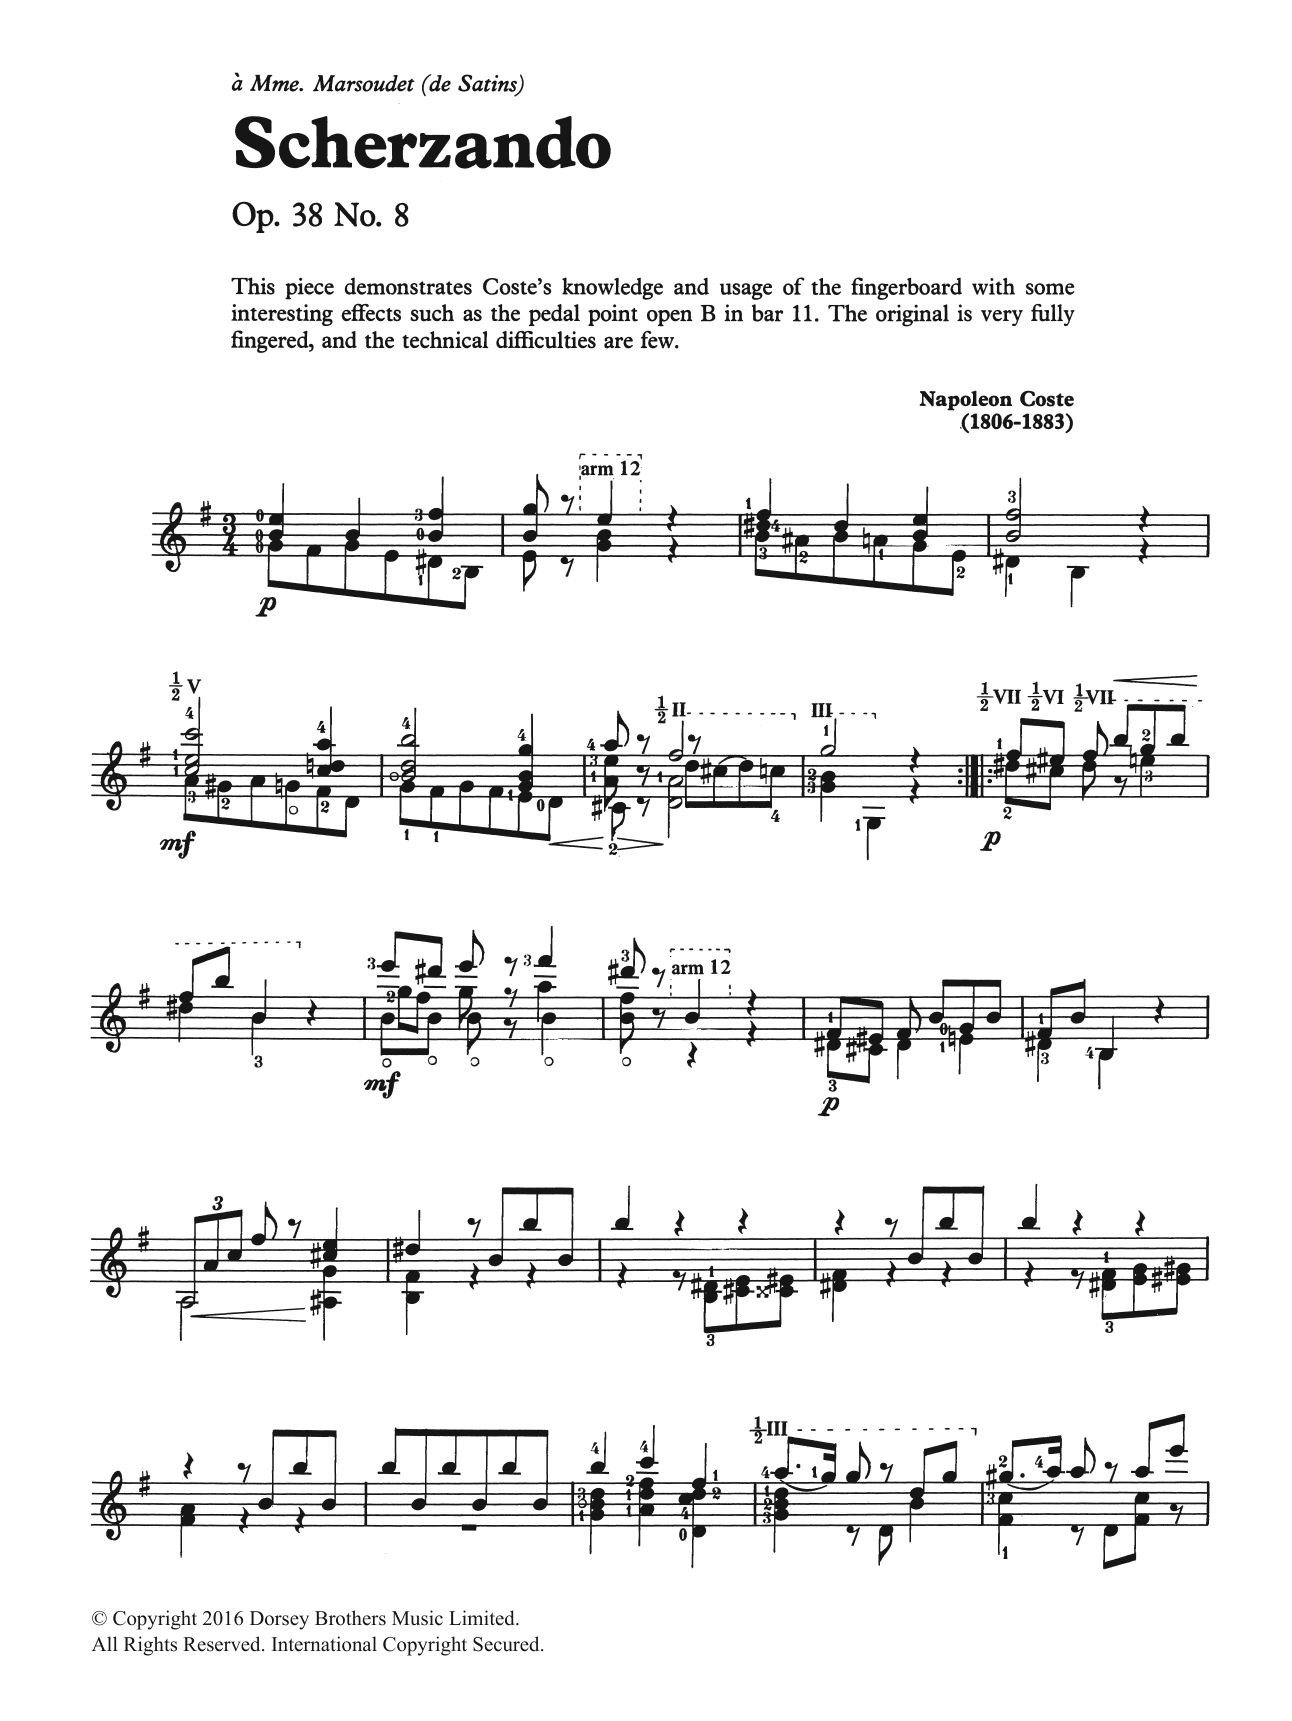 Napoleon Coste Scherzando sheet music notes and chords arranged for Easy Guitar